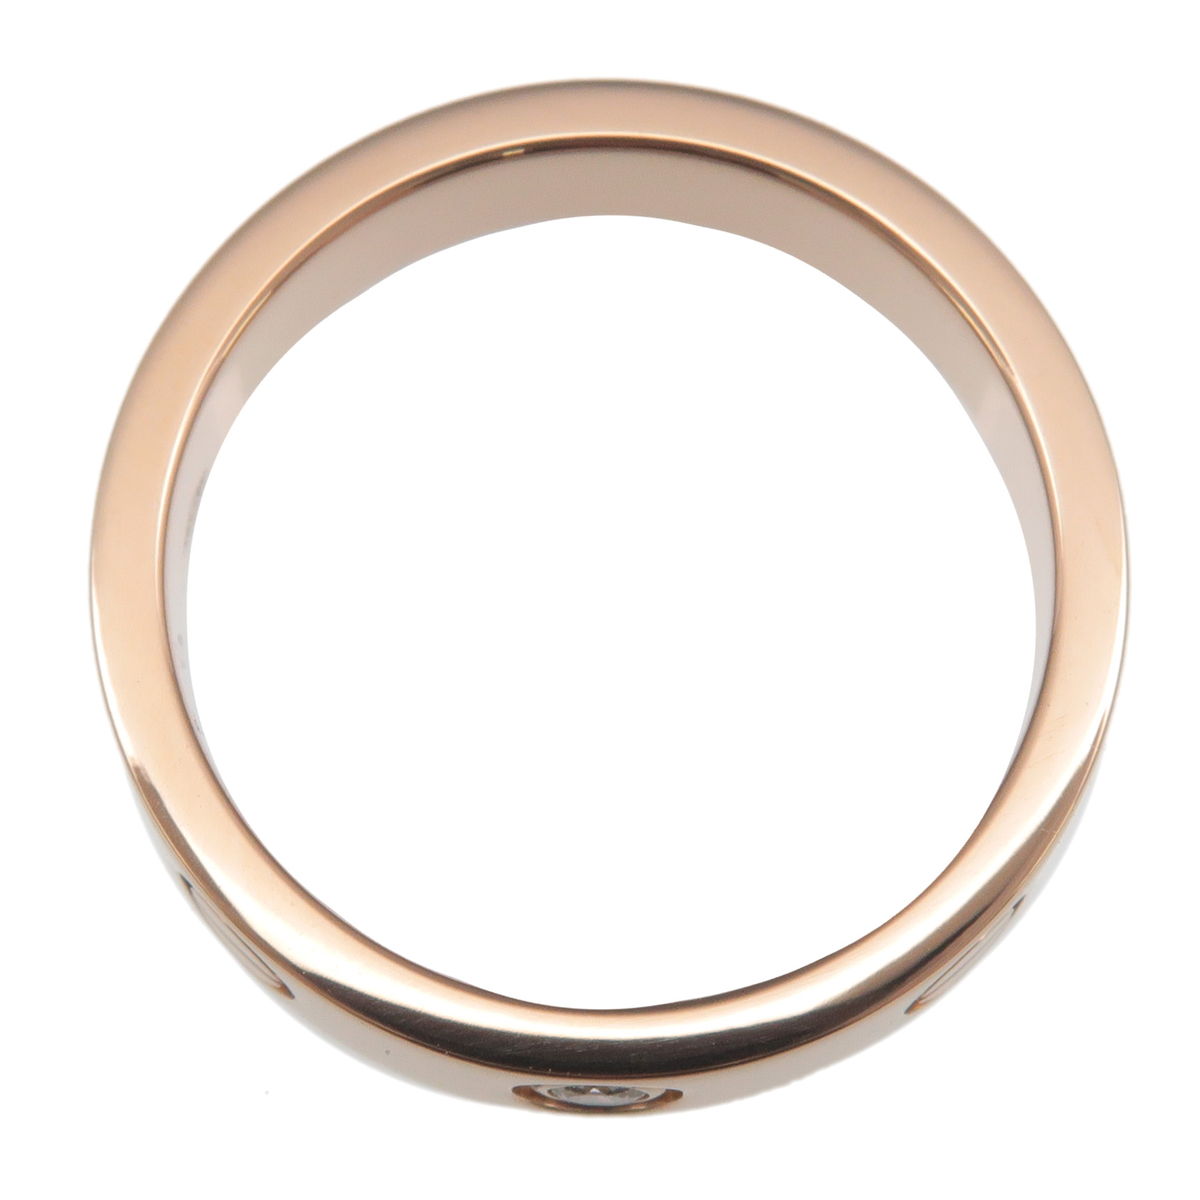 Cartier Mini Love Ring 1P Diamond K18PG 750 Rose Gold #47 US4-4.5